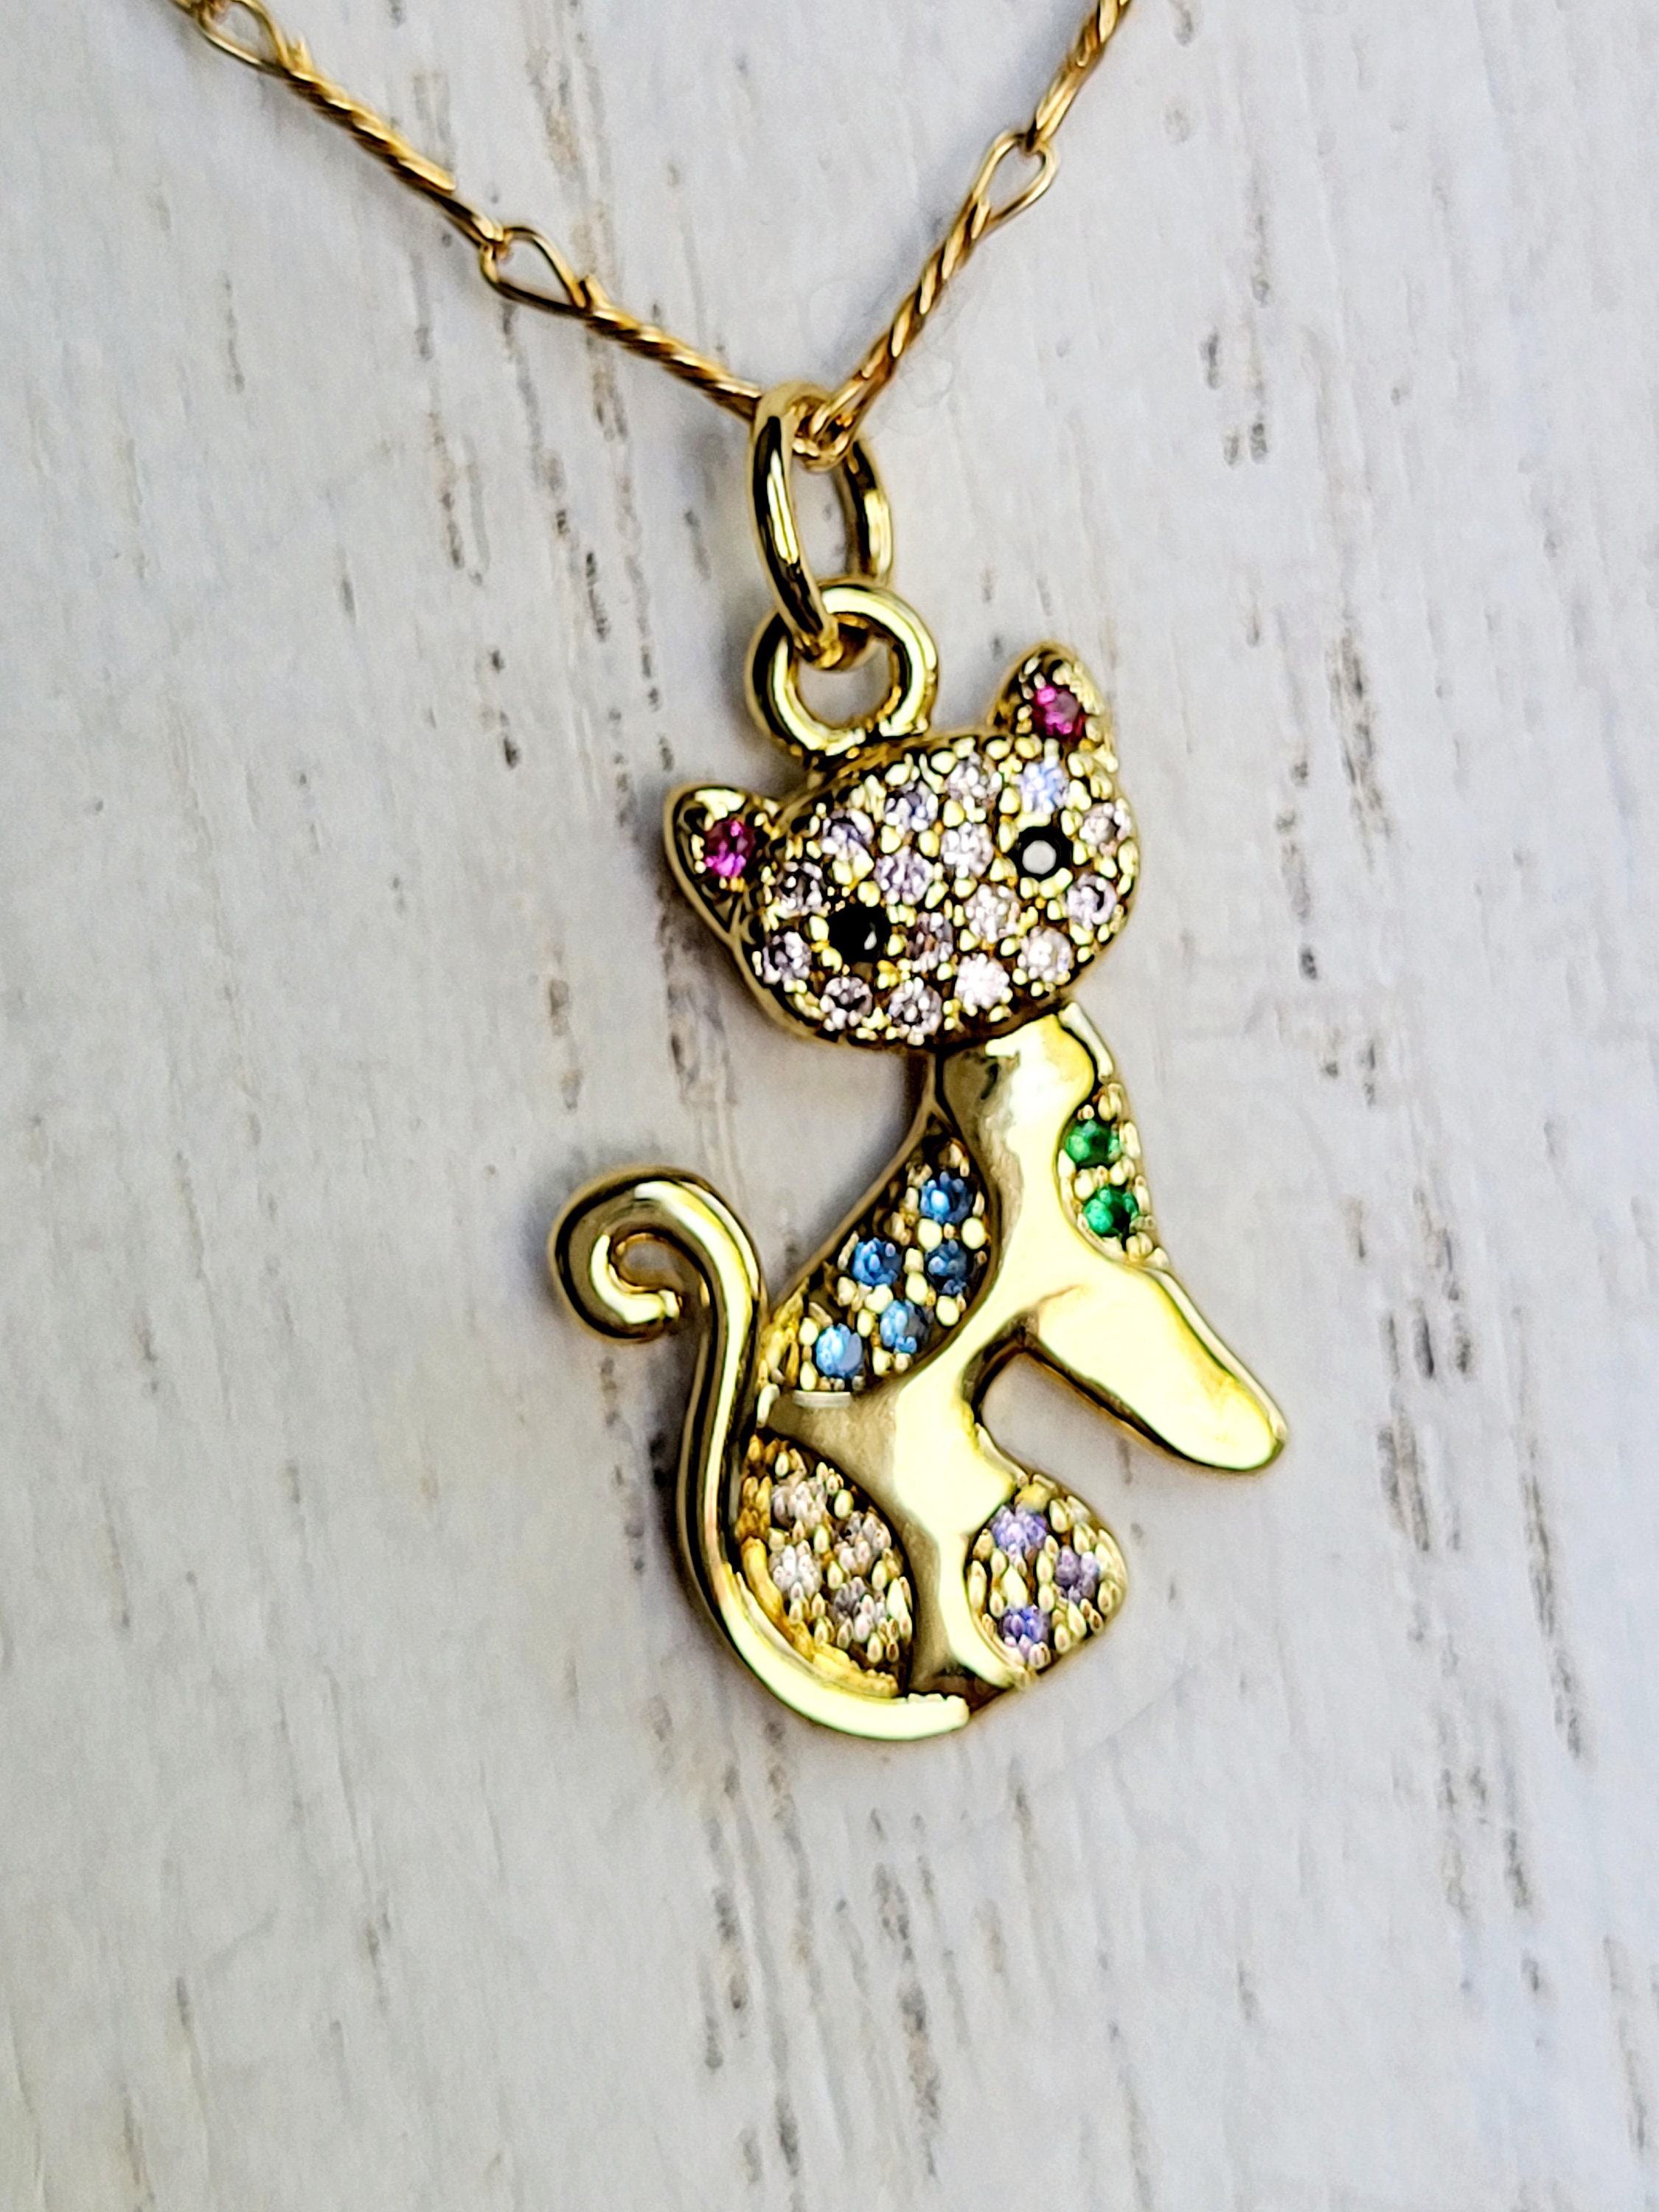 14k Solid Gold Cat Pendant Necklace | Yapar Jewelry